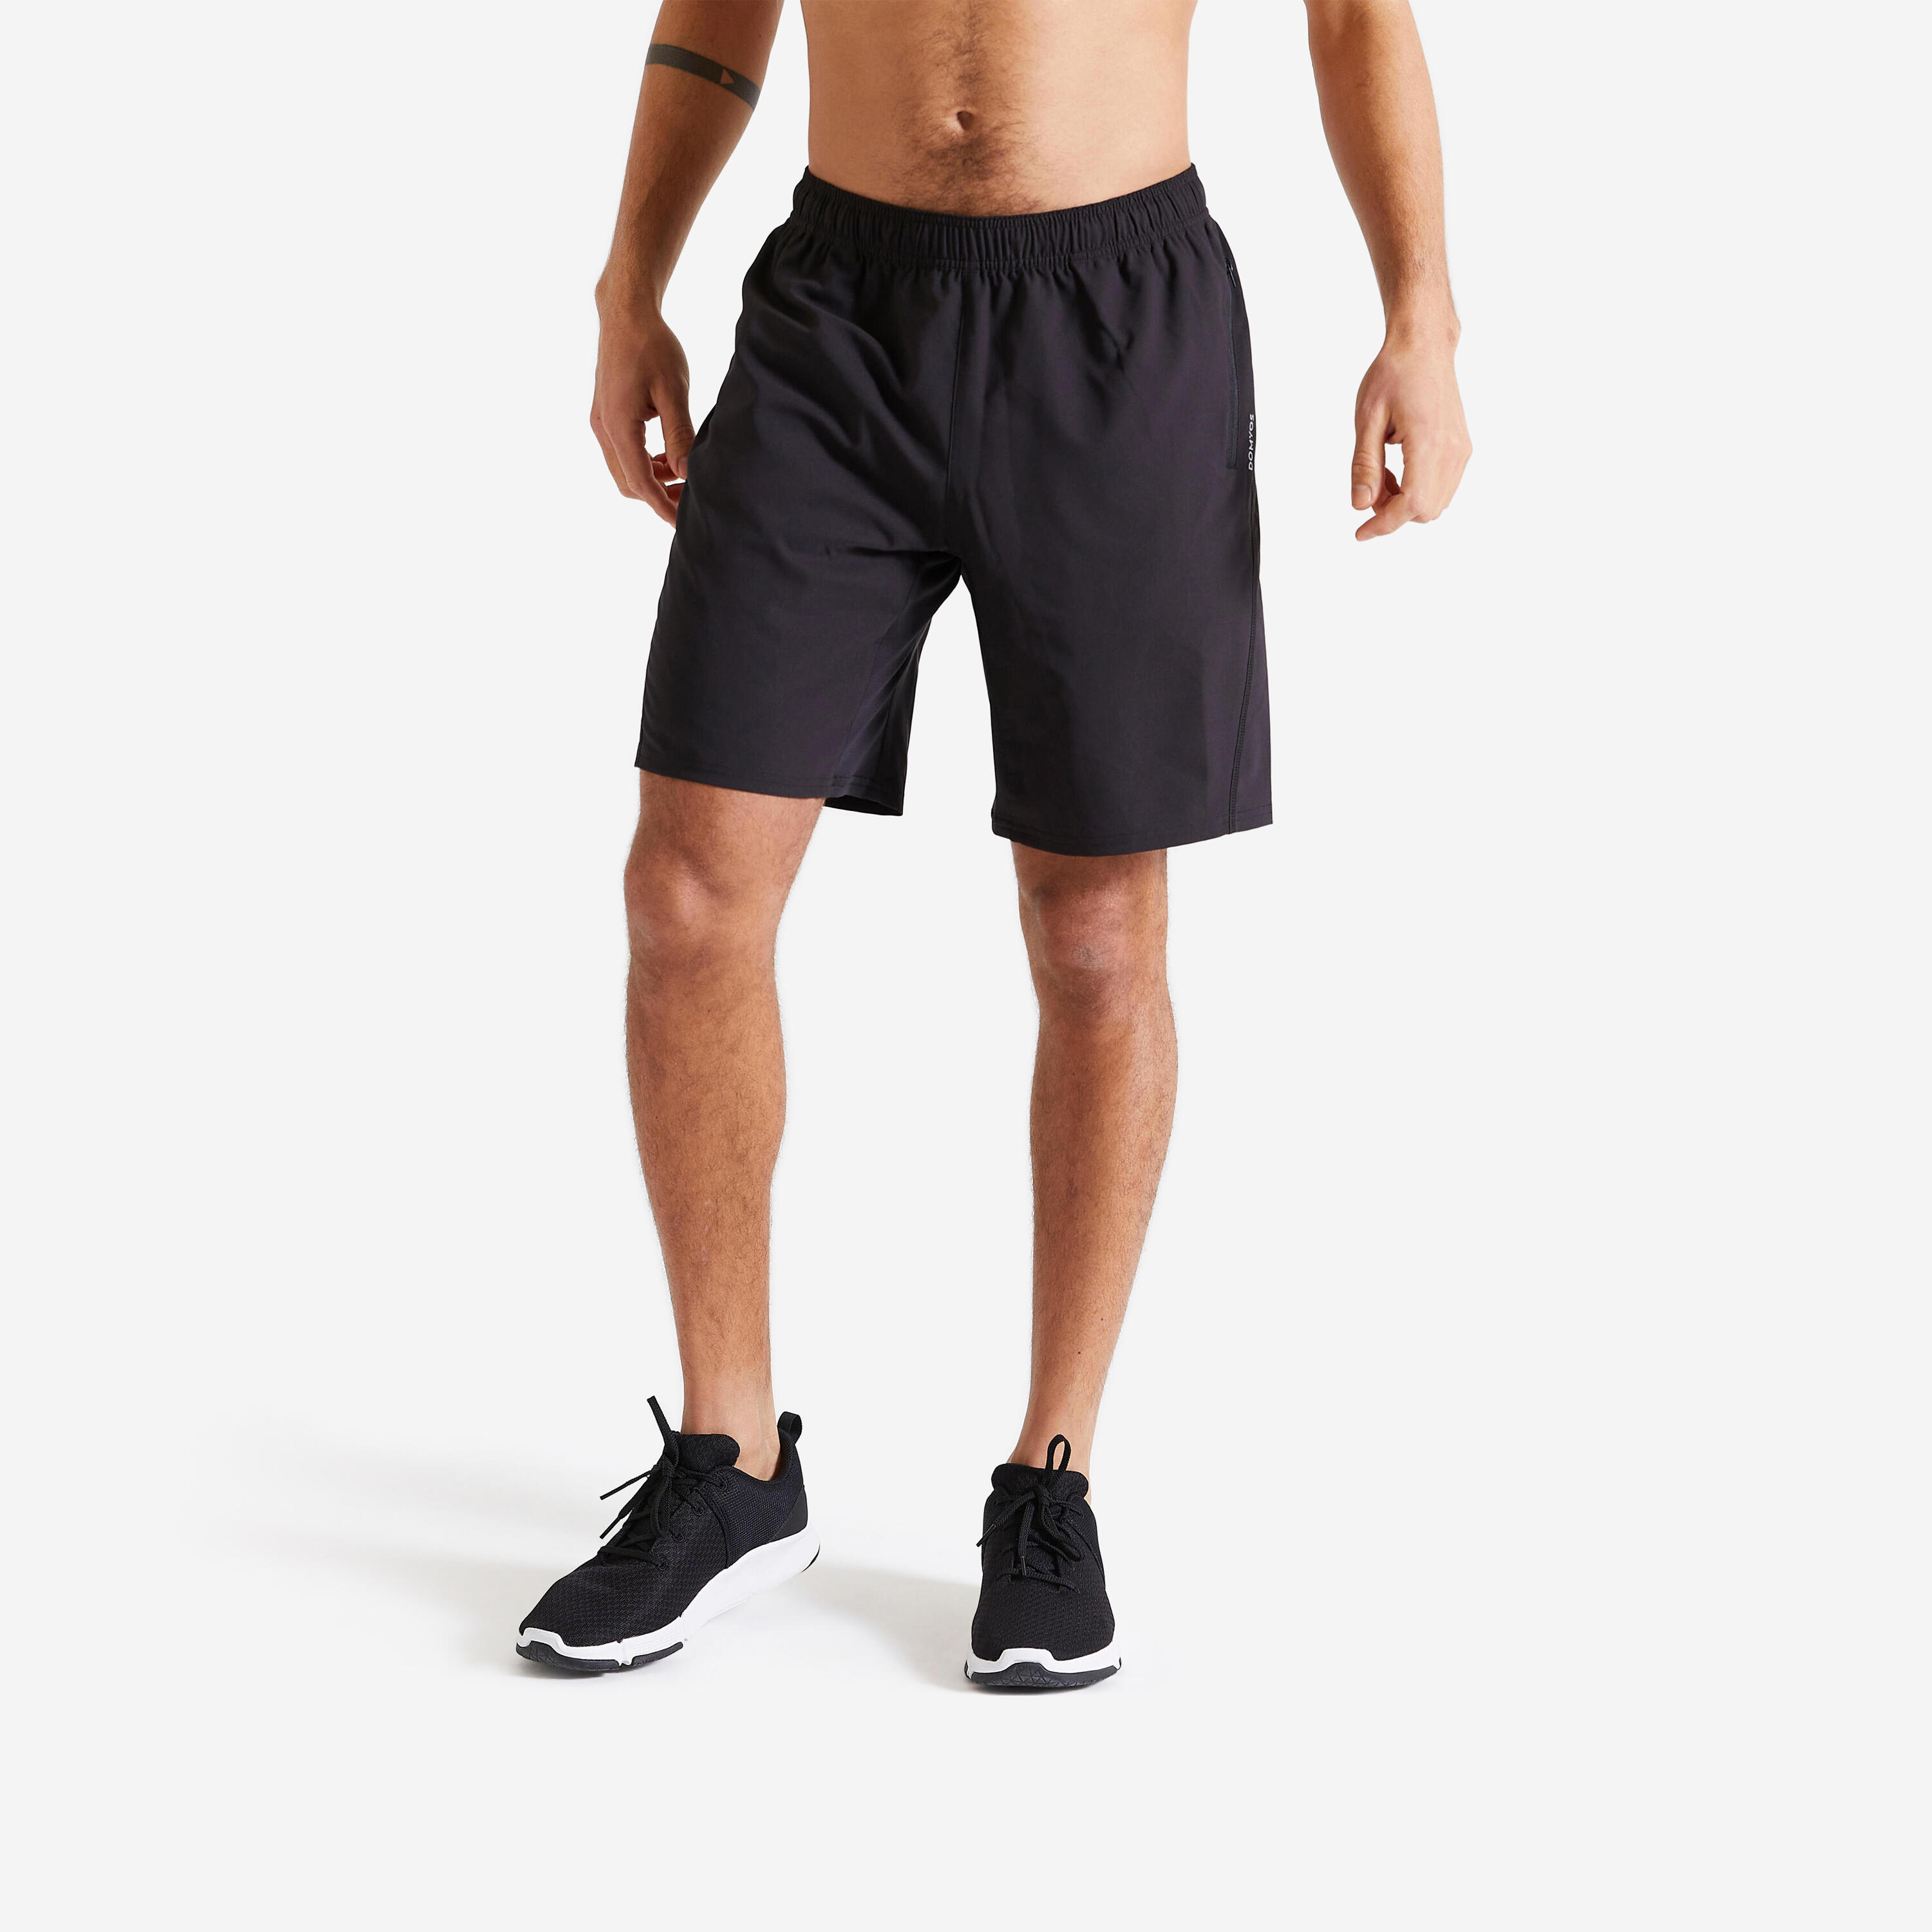 Men's Shorts –120